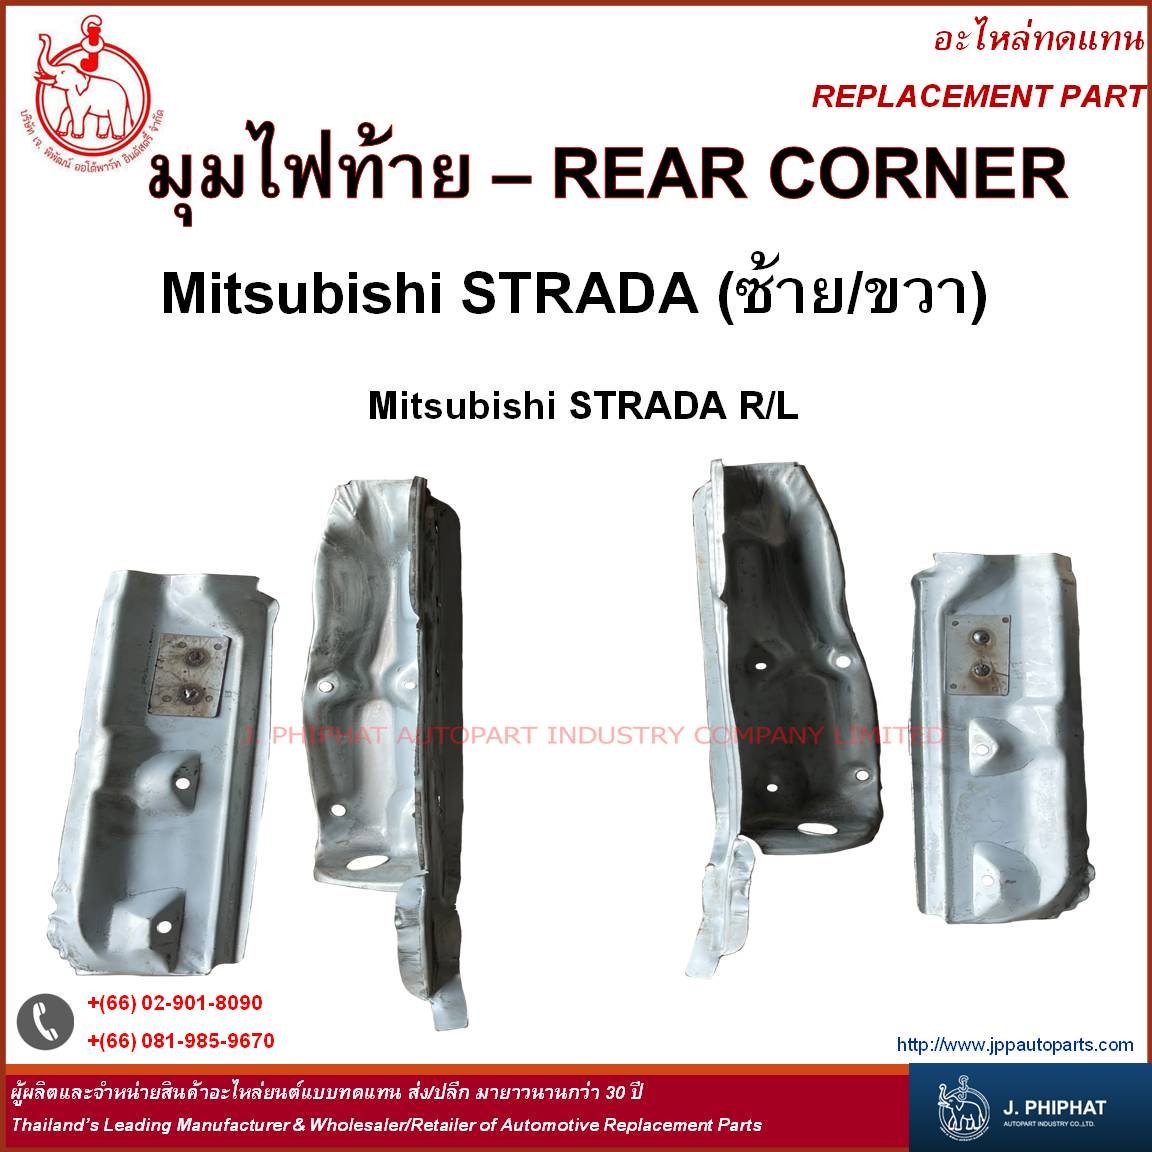 Rear Corner - Mitsubishi STRADA (R/L)